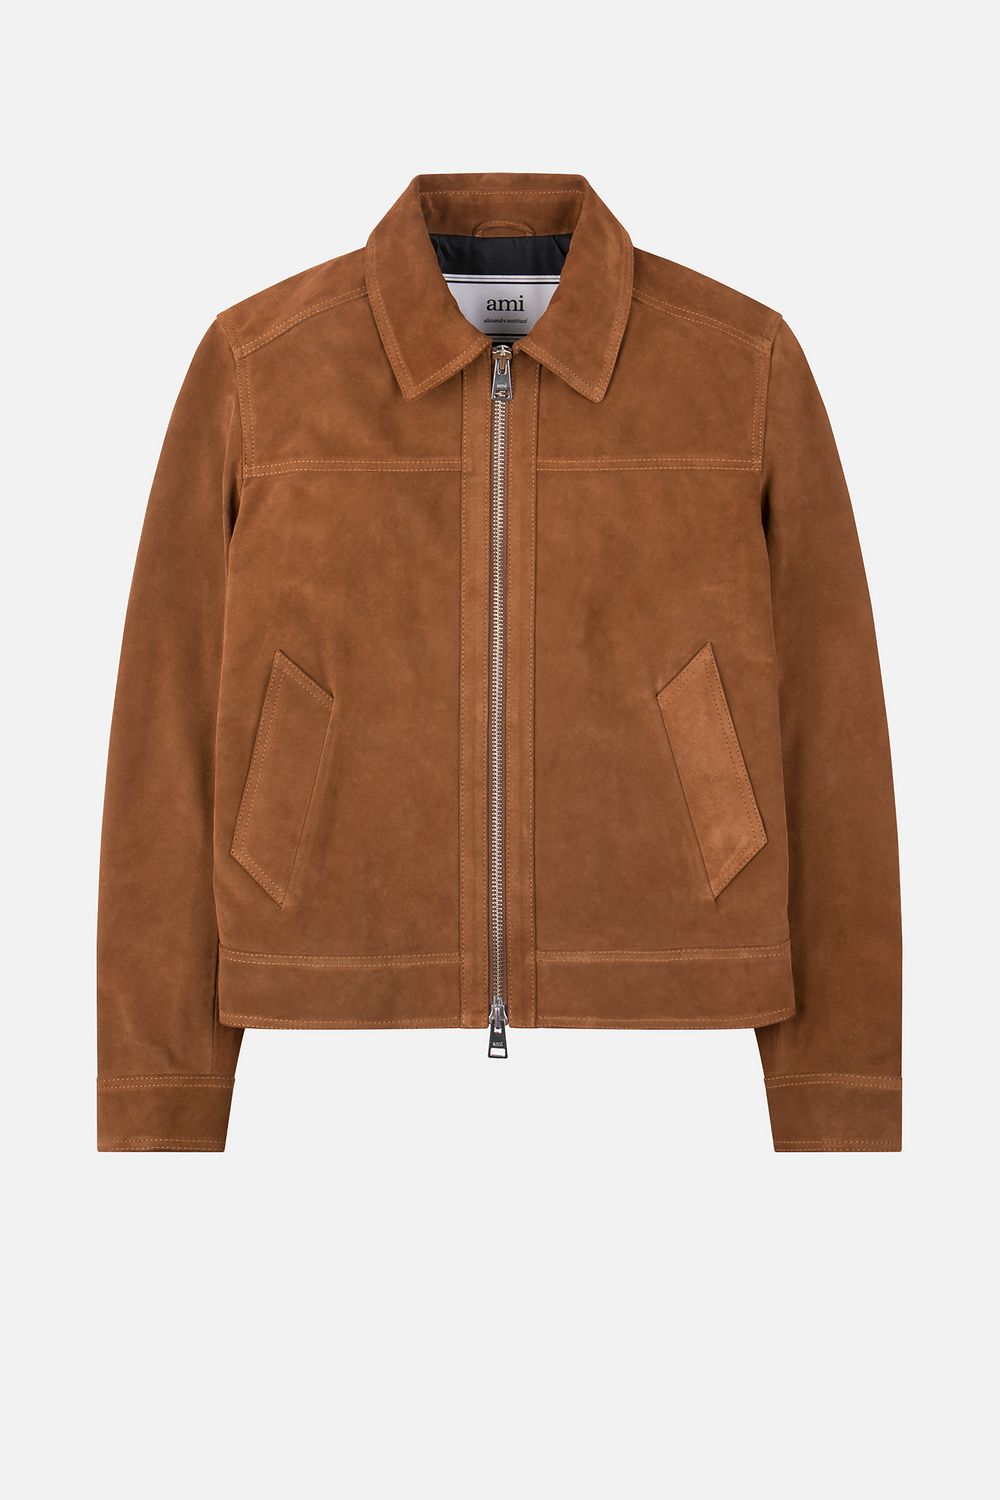 suede leather zipped jacket - AMI Paris Official